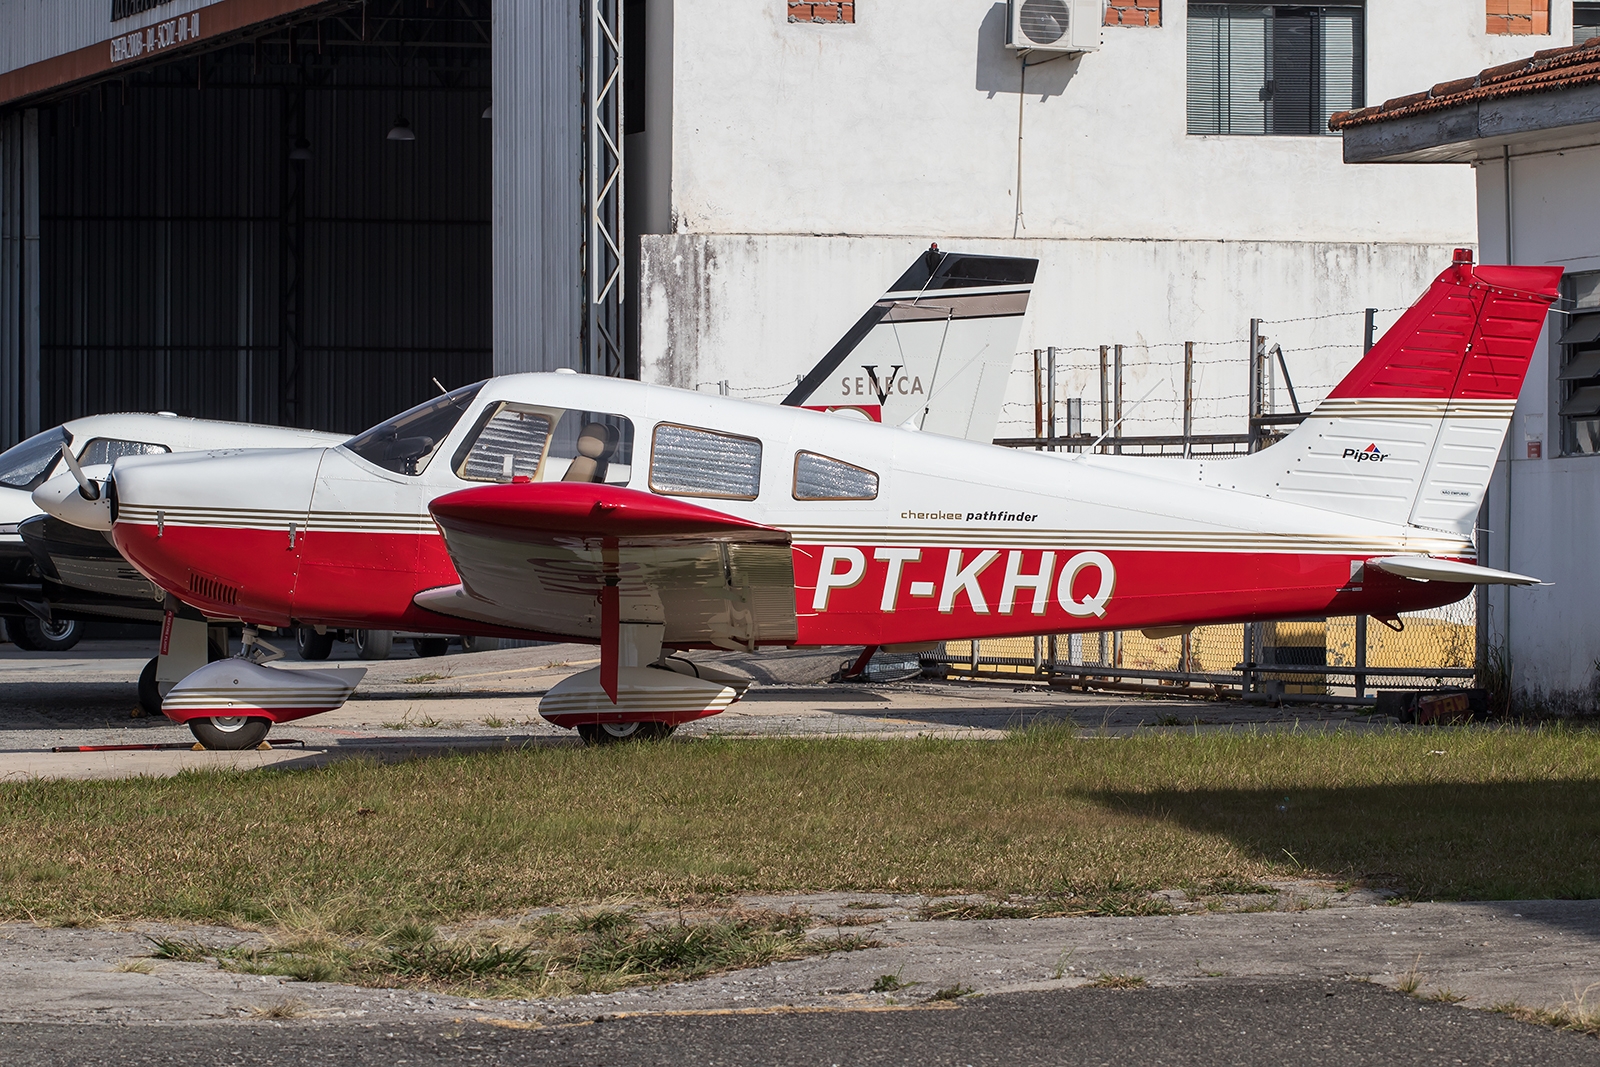 PT-KHQ - Piper PA-28-235 Cherokee Pathfinder